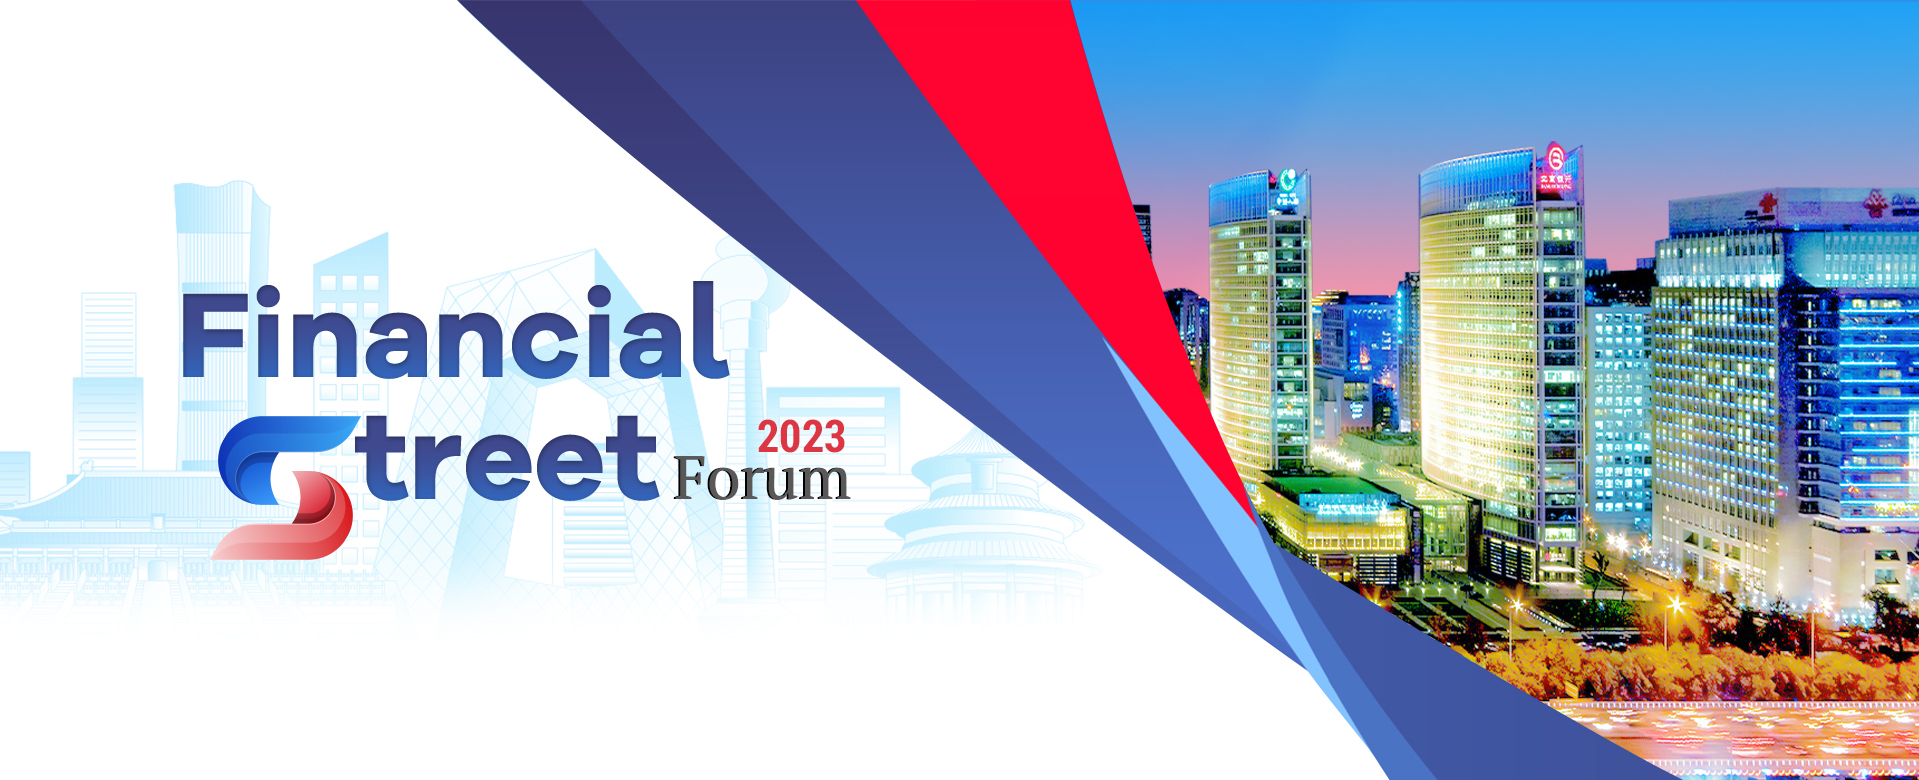 Financial Street Forum 2023